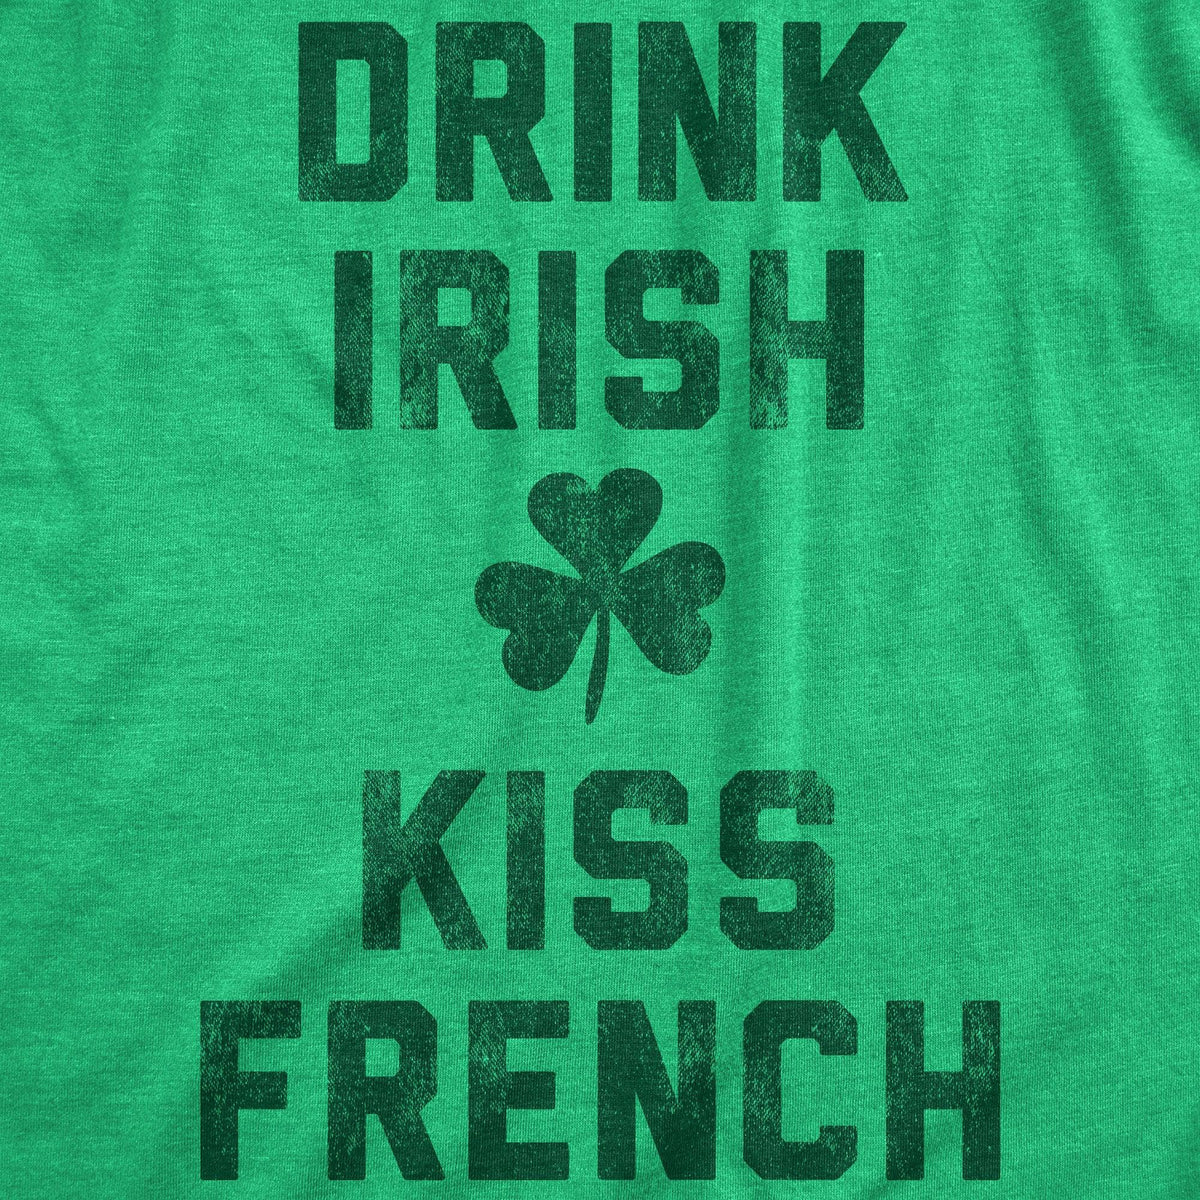 Drink Irish Kiss French Women&#39;s Tshirt  -  Crazy Dog T-Shirts